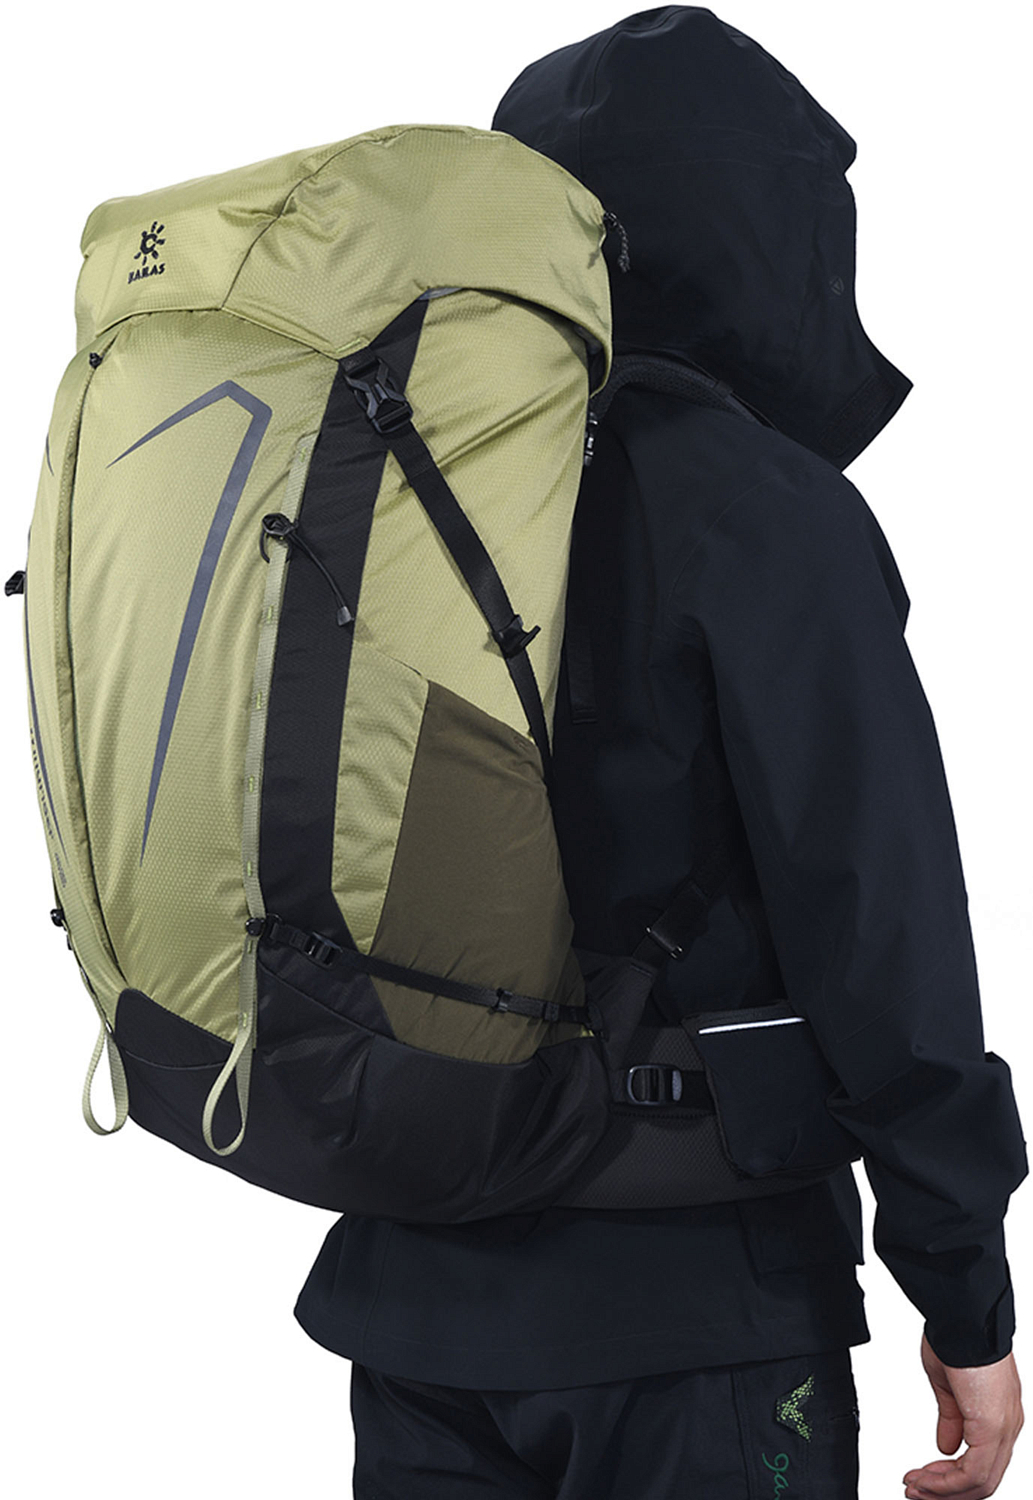 Рюкзак Kailas Windrider Lightweight Trekking Backpack 45L Laurel Leaf Green